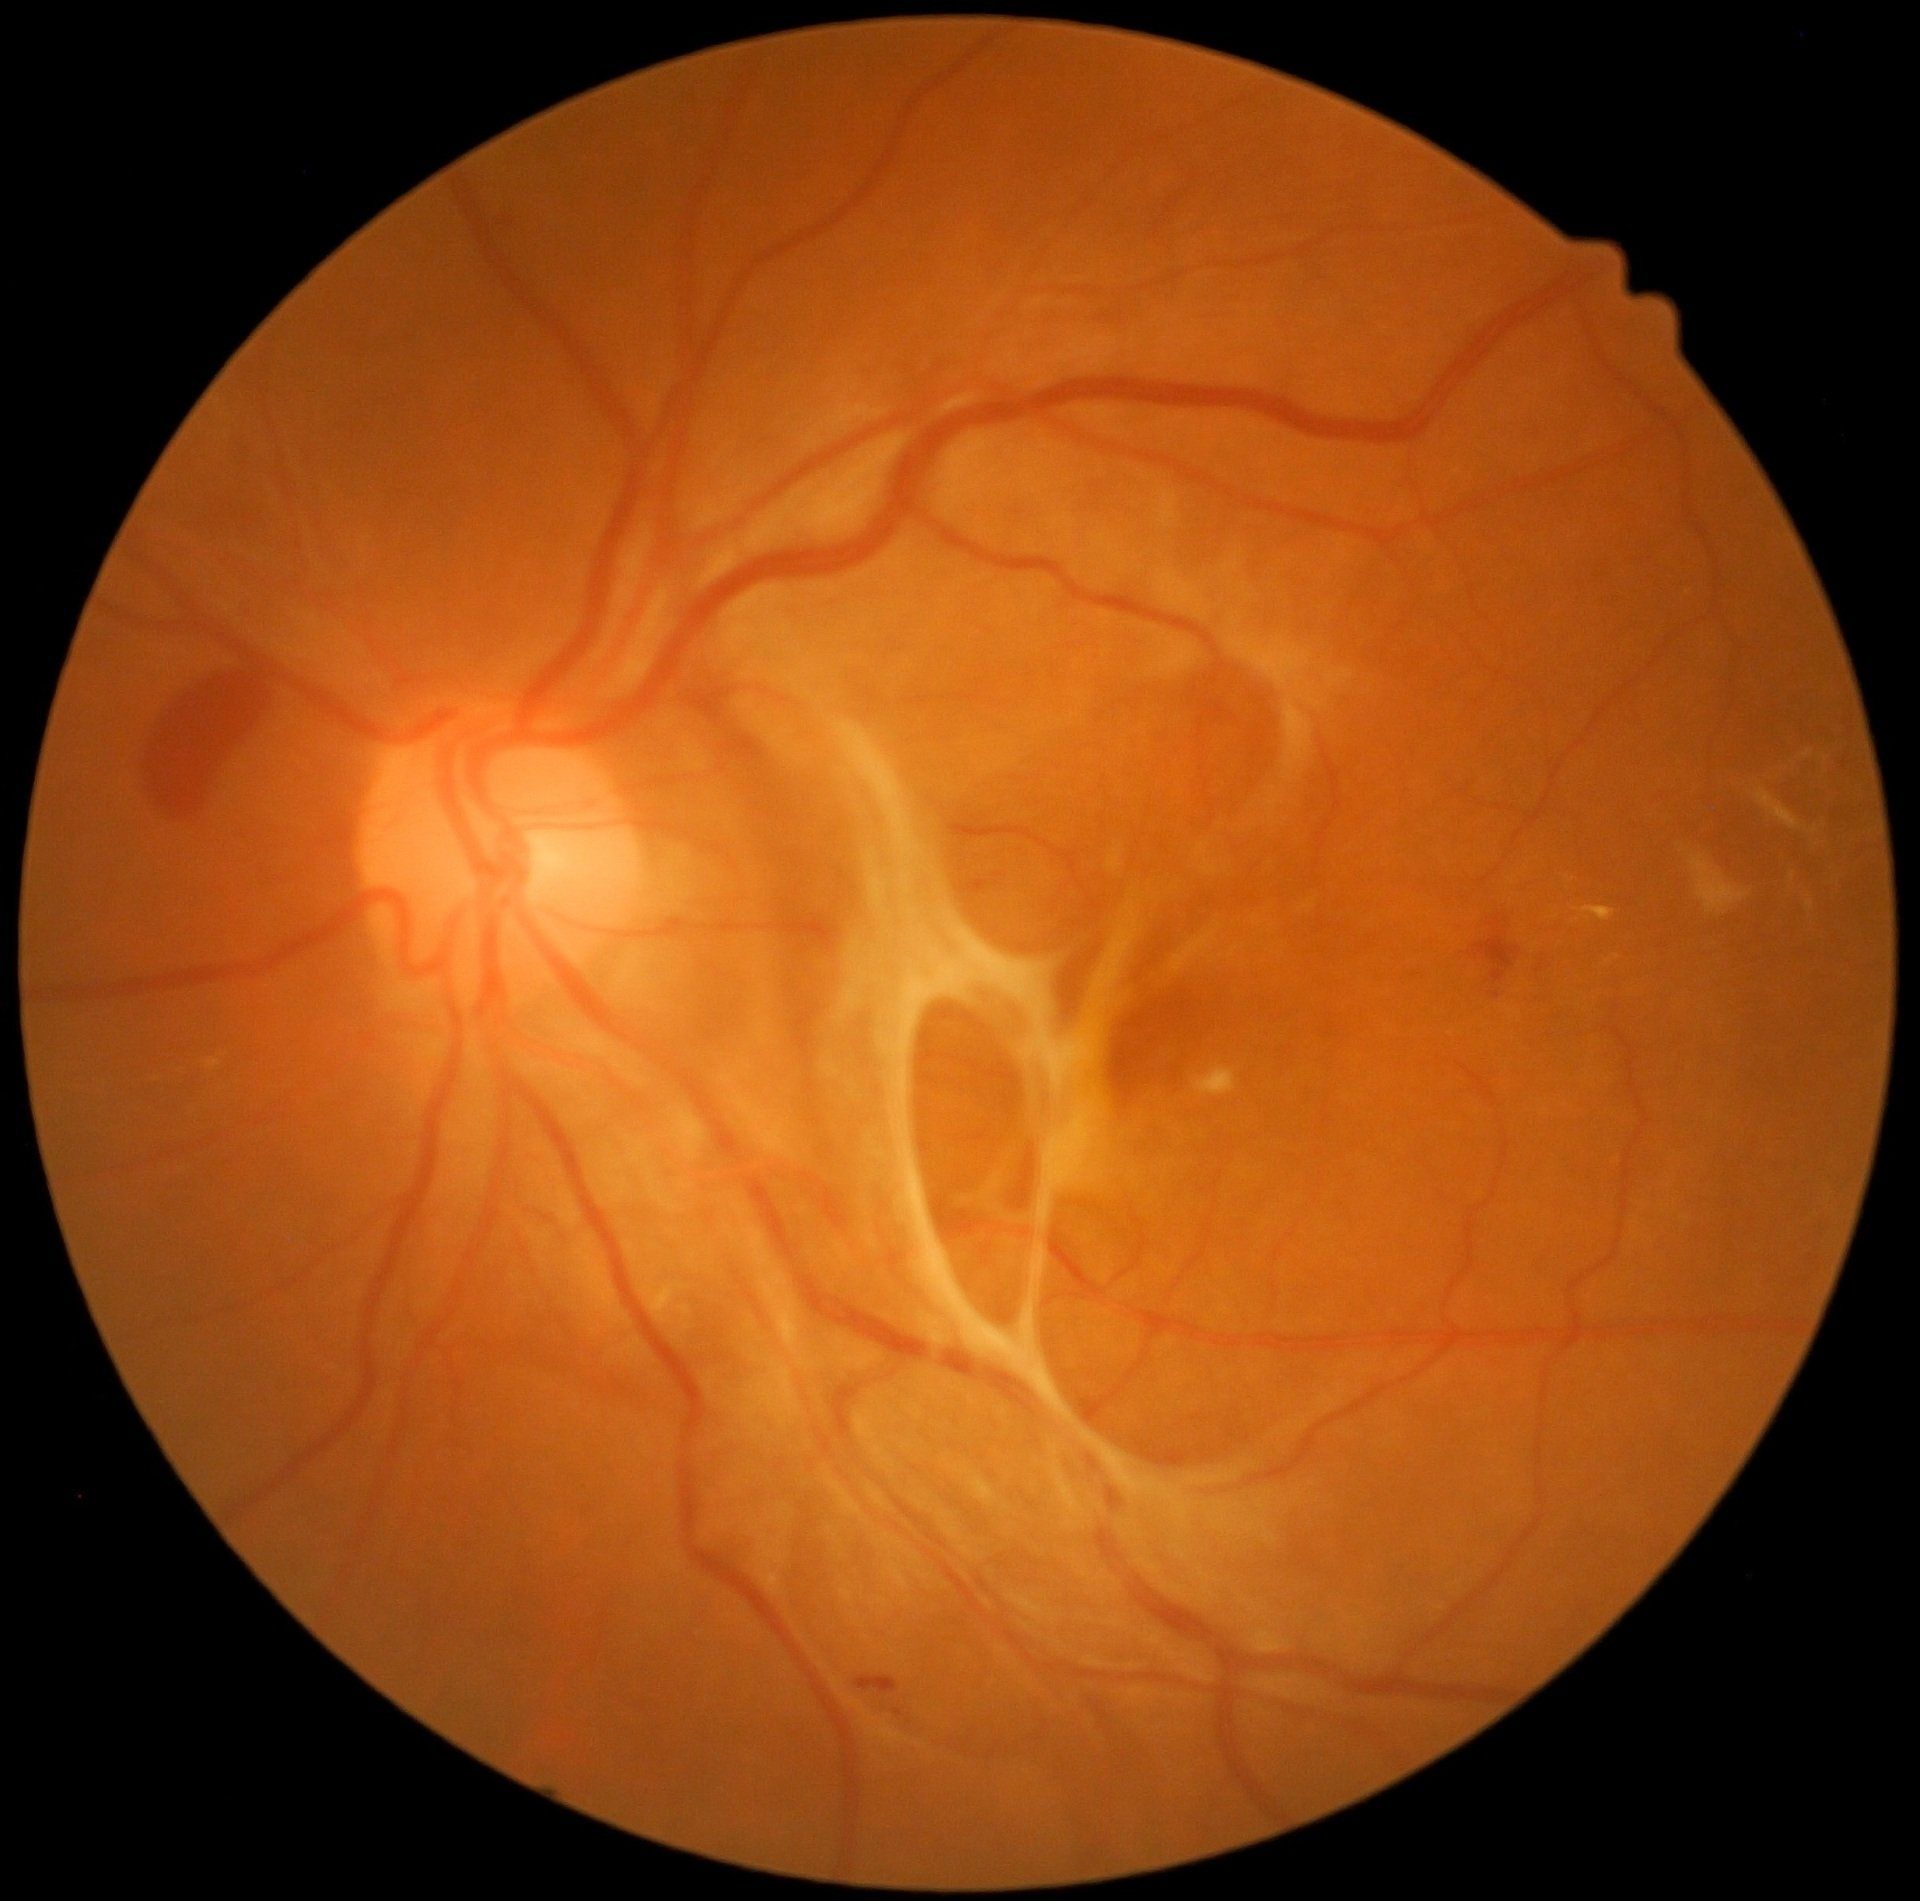 Tractional retinal detachment